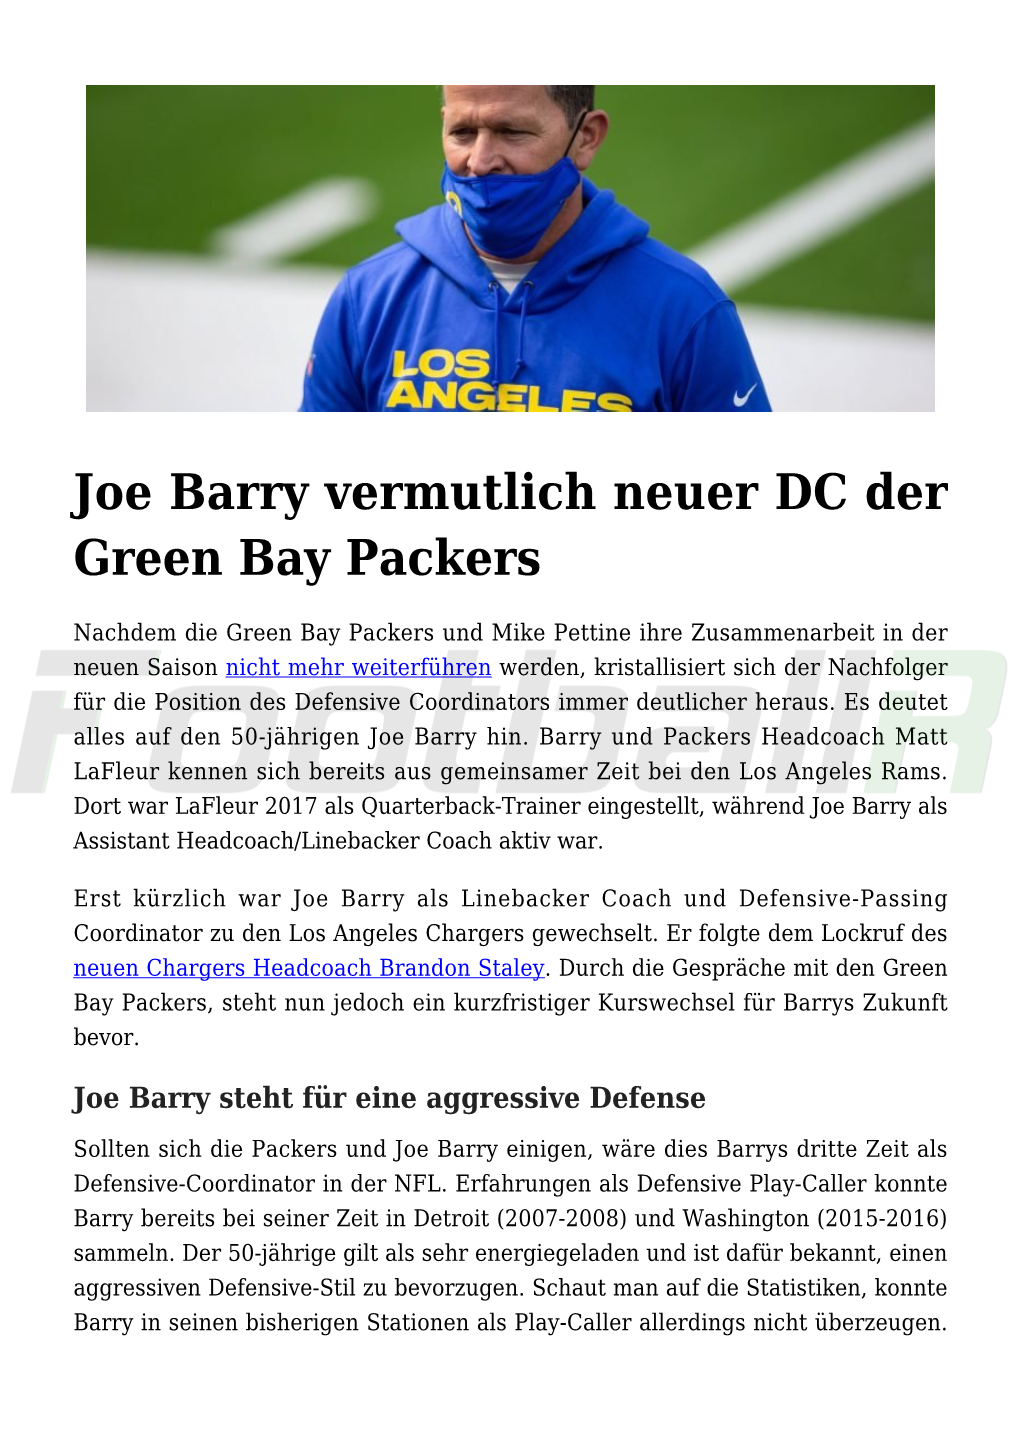 Joe Barry Vermutlich Neuer DC Der Green Bay Packers